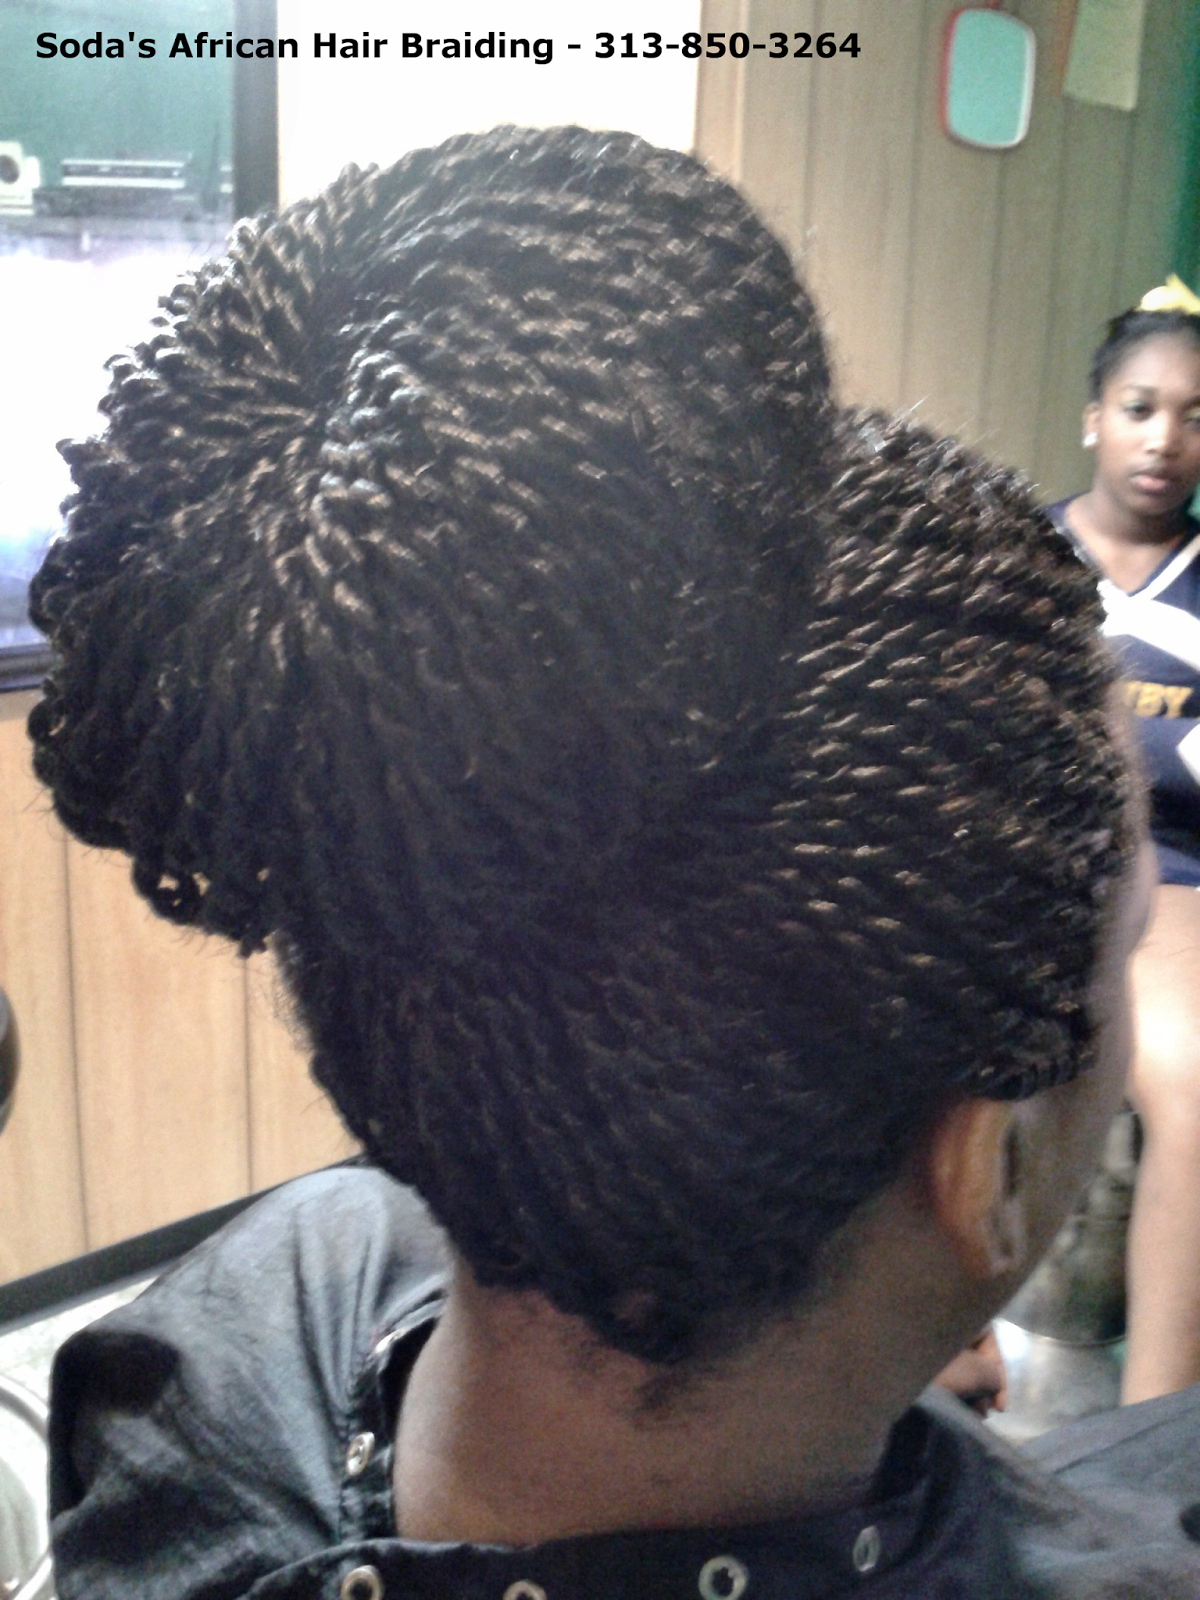 Sodas African Hair Braiding Our Hair Style Gallery